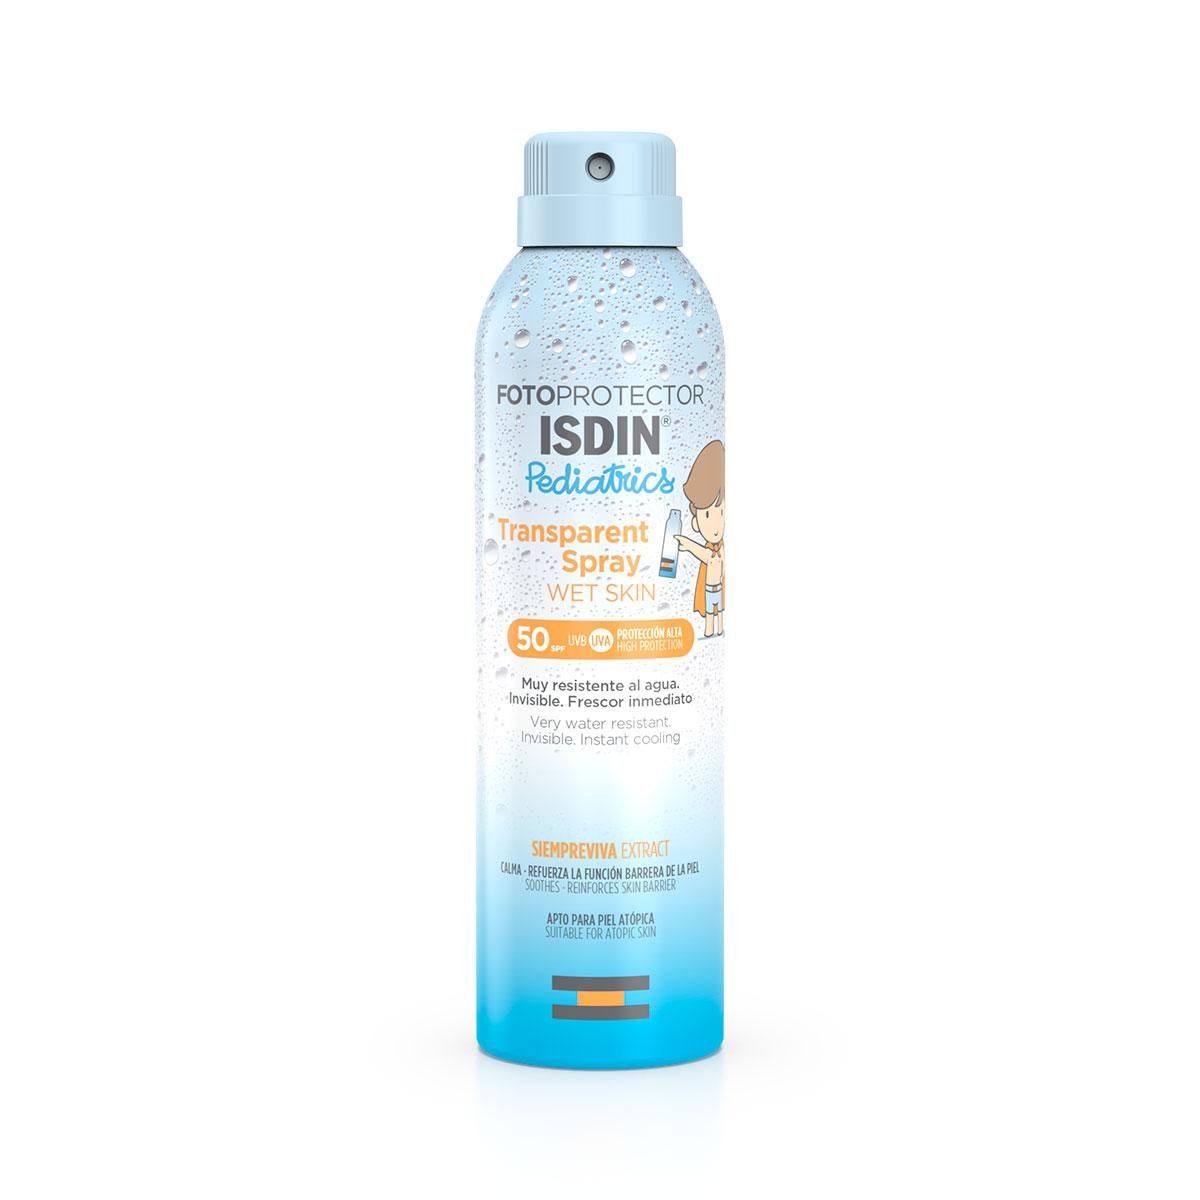 Buy Isdin Fotoprotector SPF50 Pediatrics Spray Transparent Wet Skin 250Ml.  Deals on Isdin brand. Buy Now!!